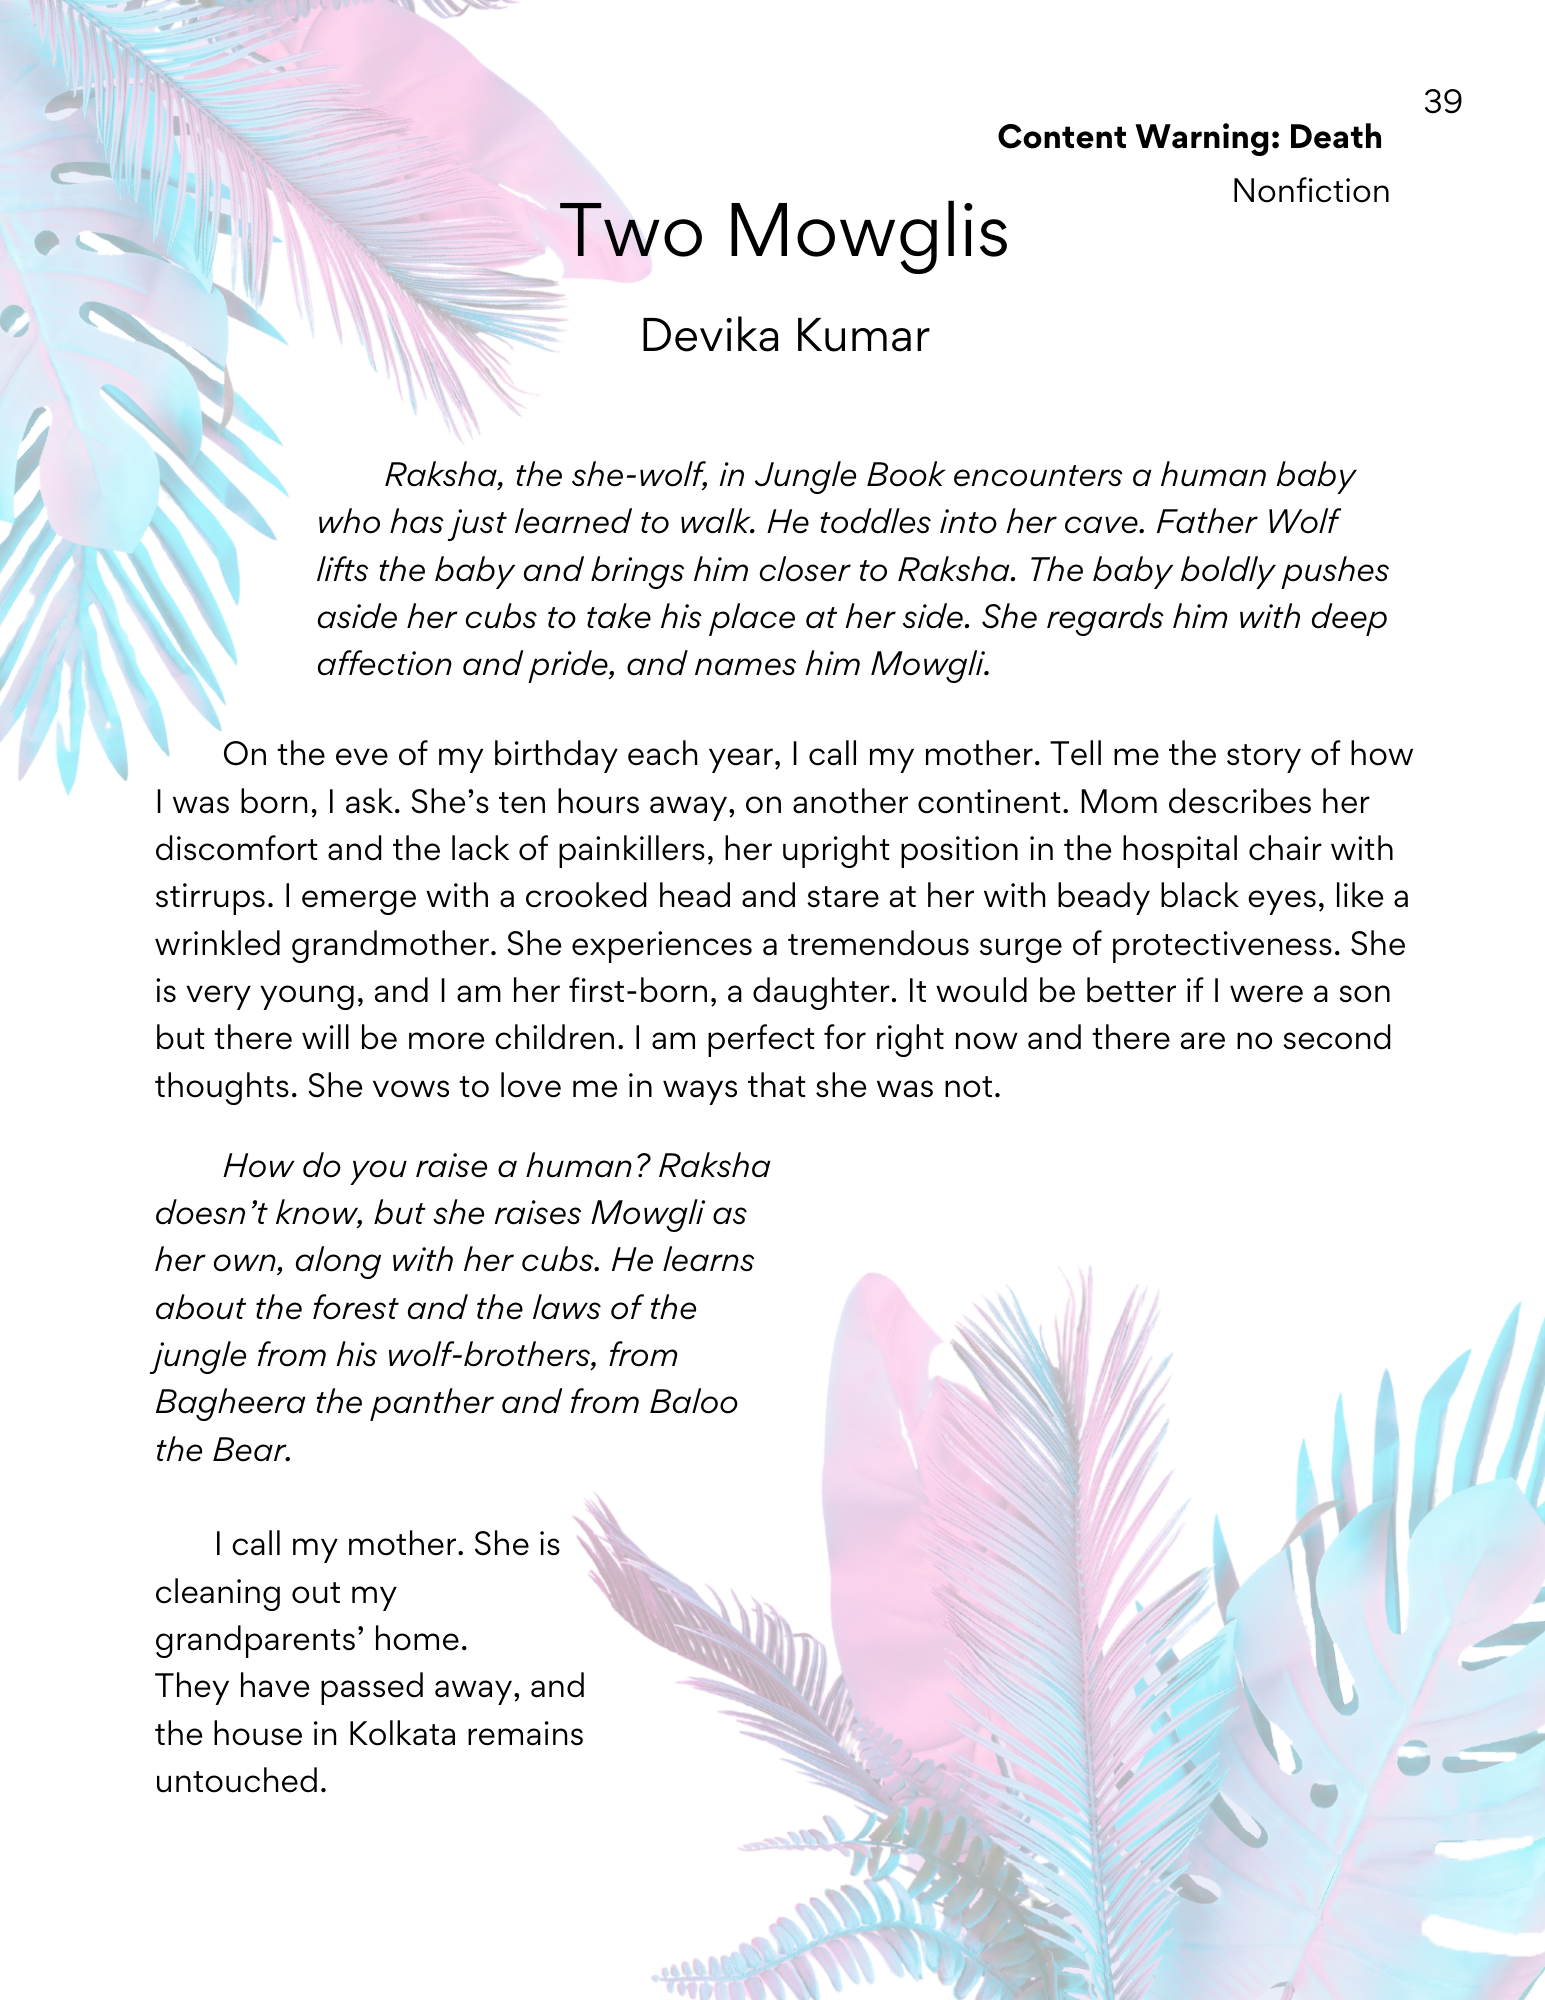 Two Mowglis pg. 1.png